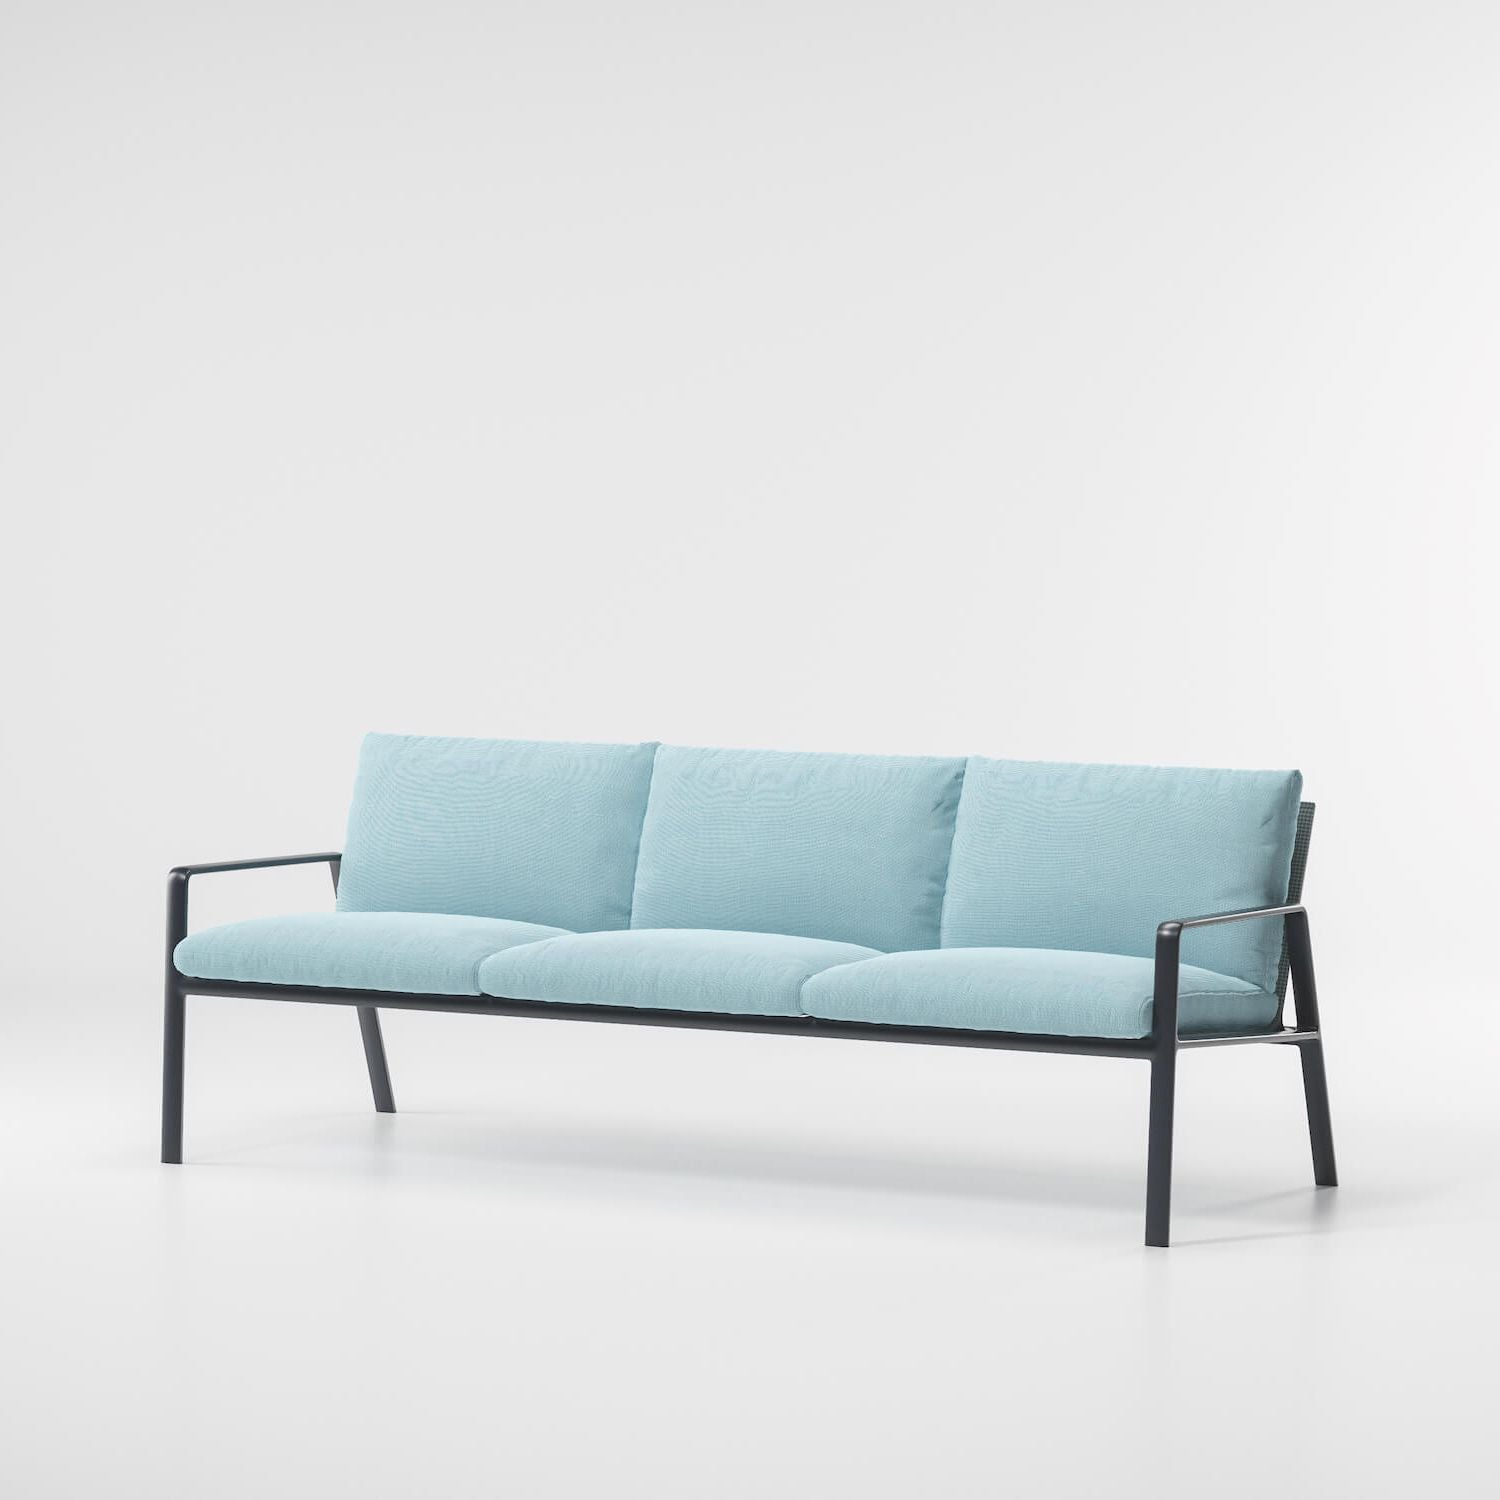 Kettal Park Life 3-Seater Sofa